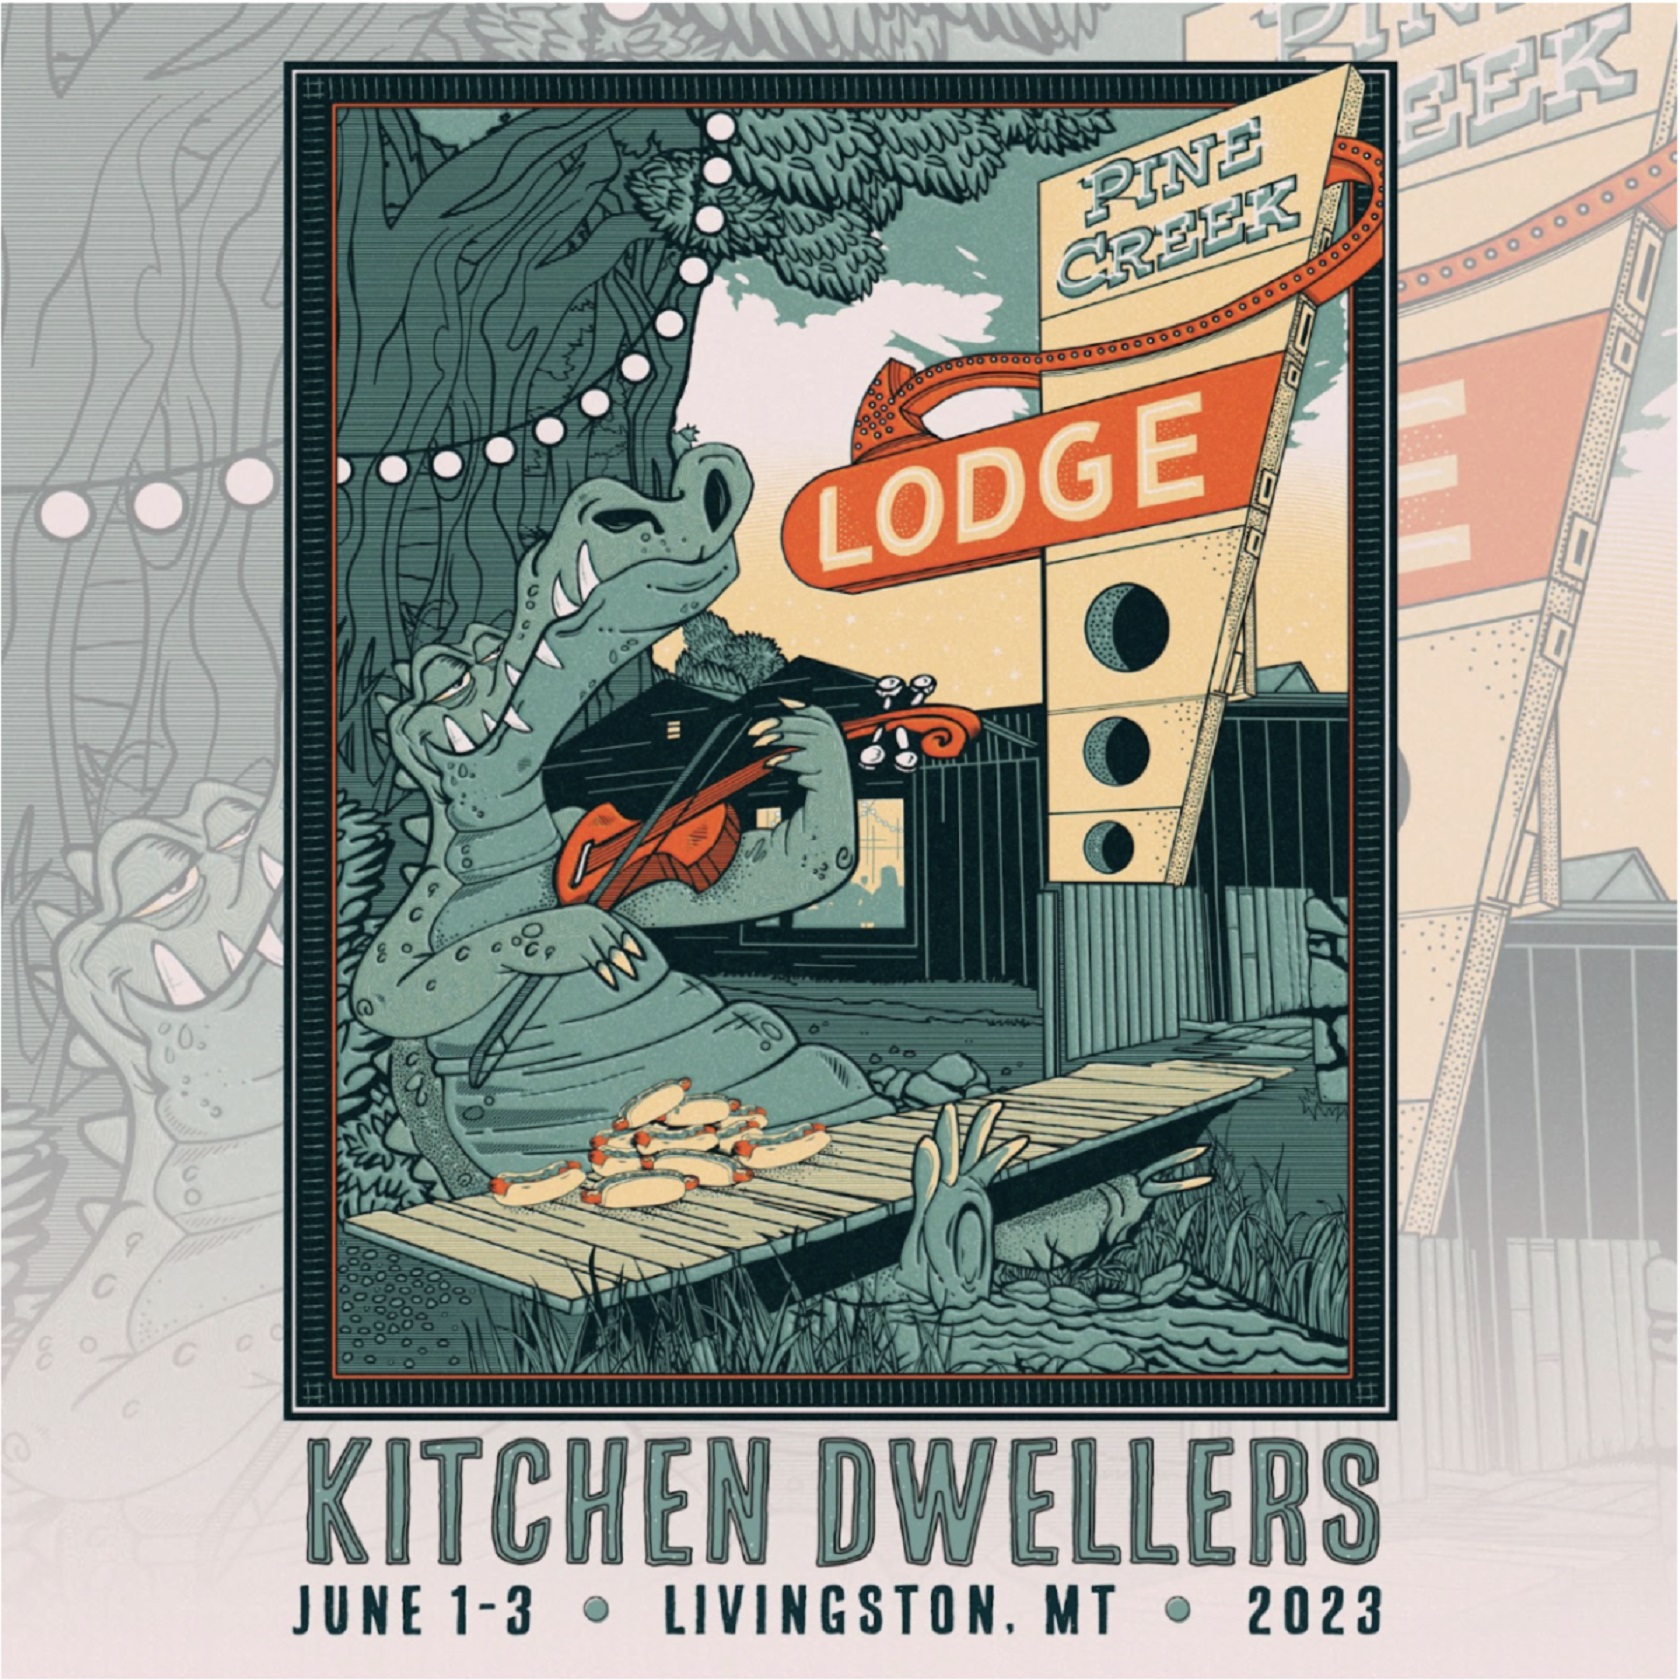 Kitchen Dwellers announce three night run at Pine Creek Lodge in Livingston, MT